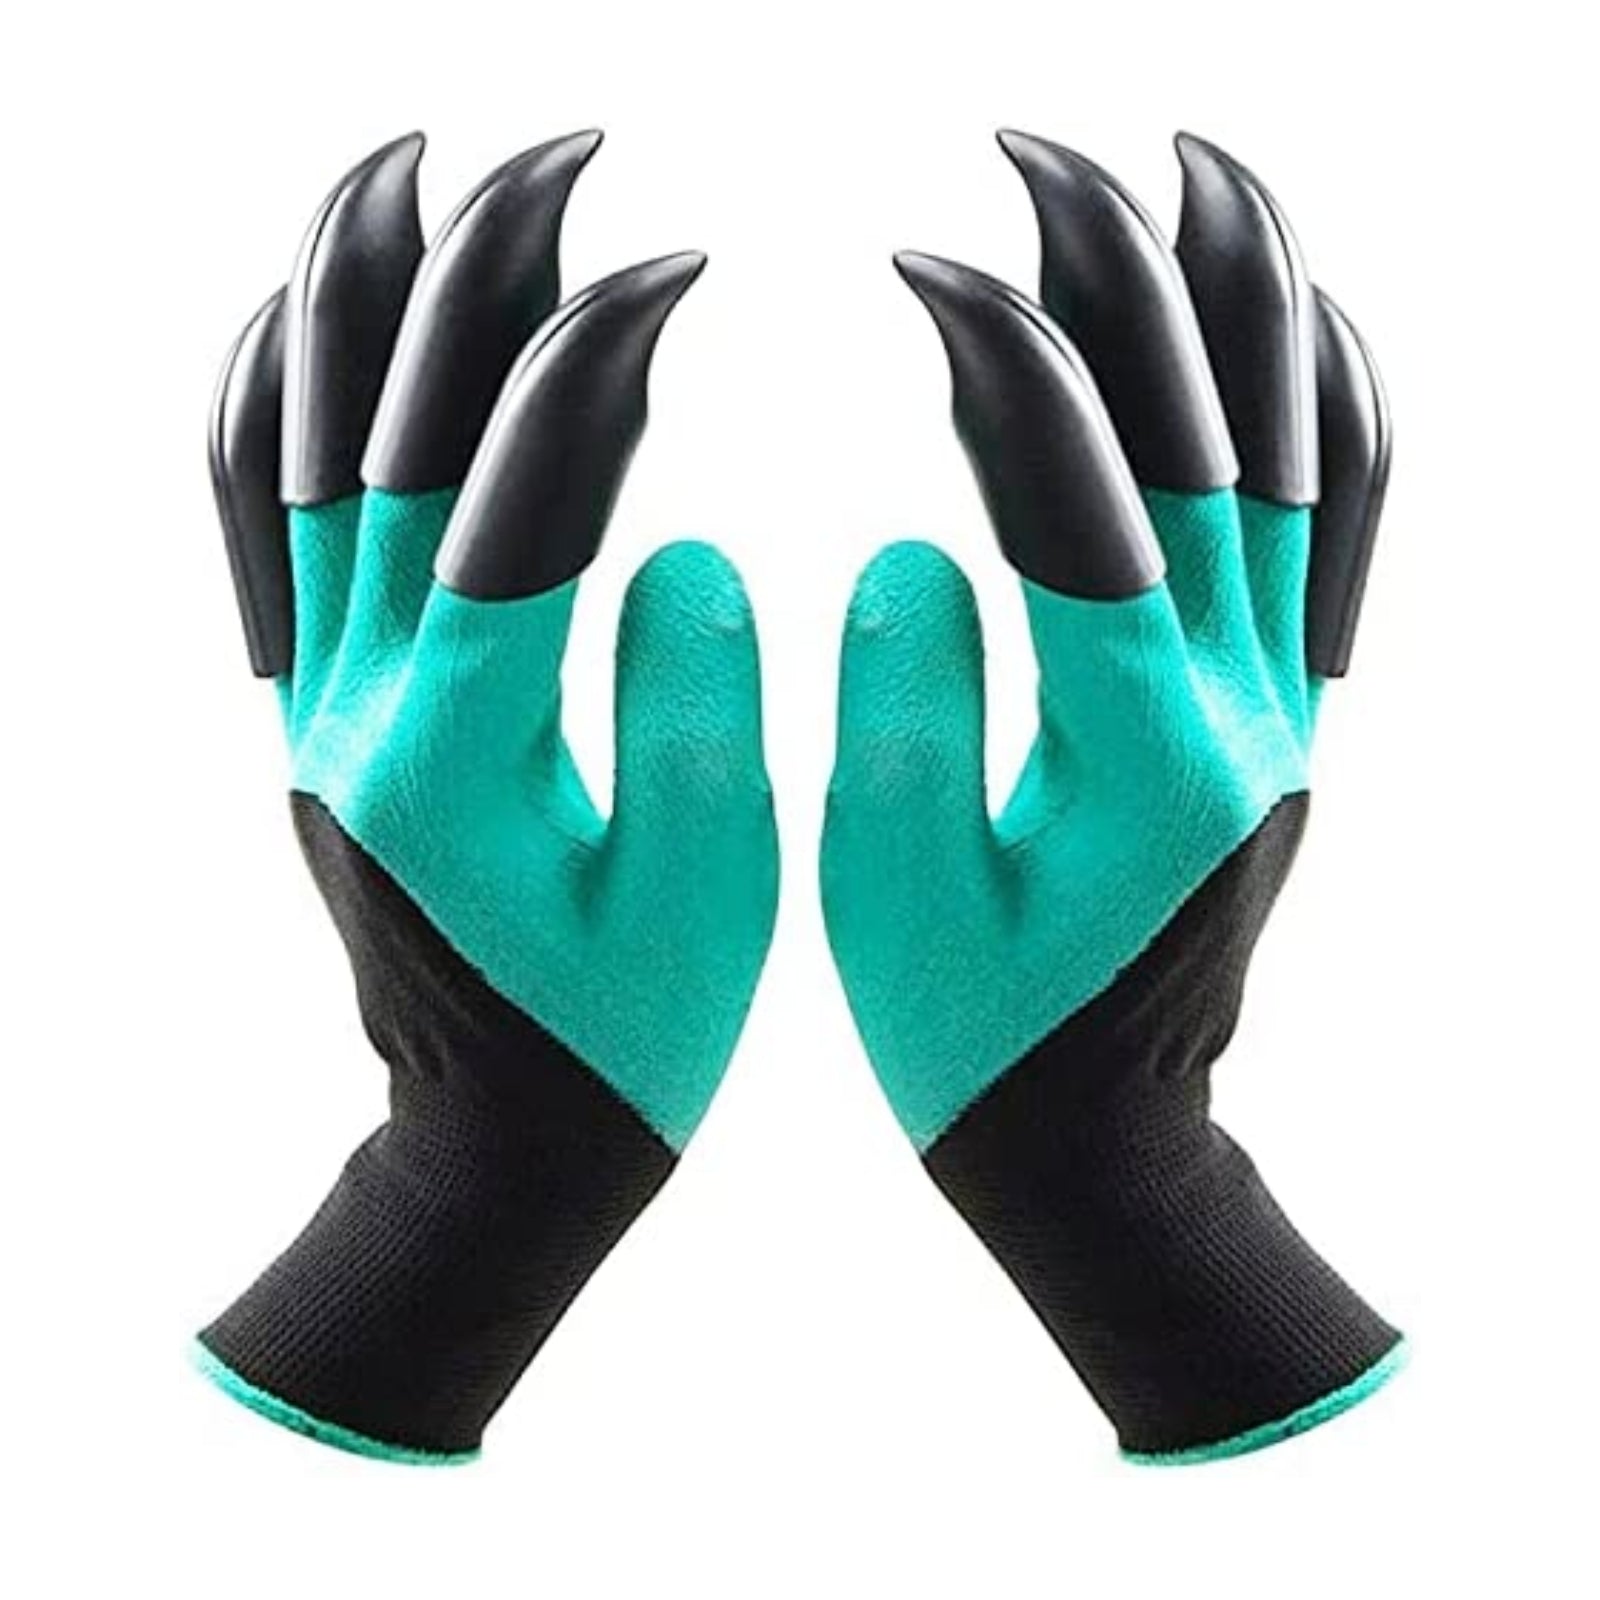 Garden Gloves with Claws - Homeware Discounts